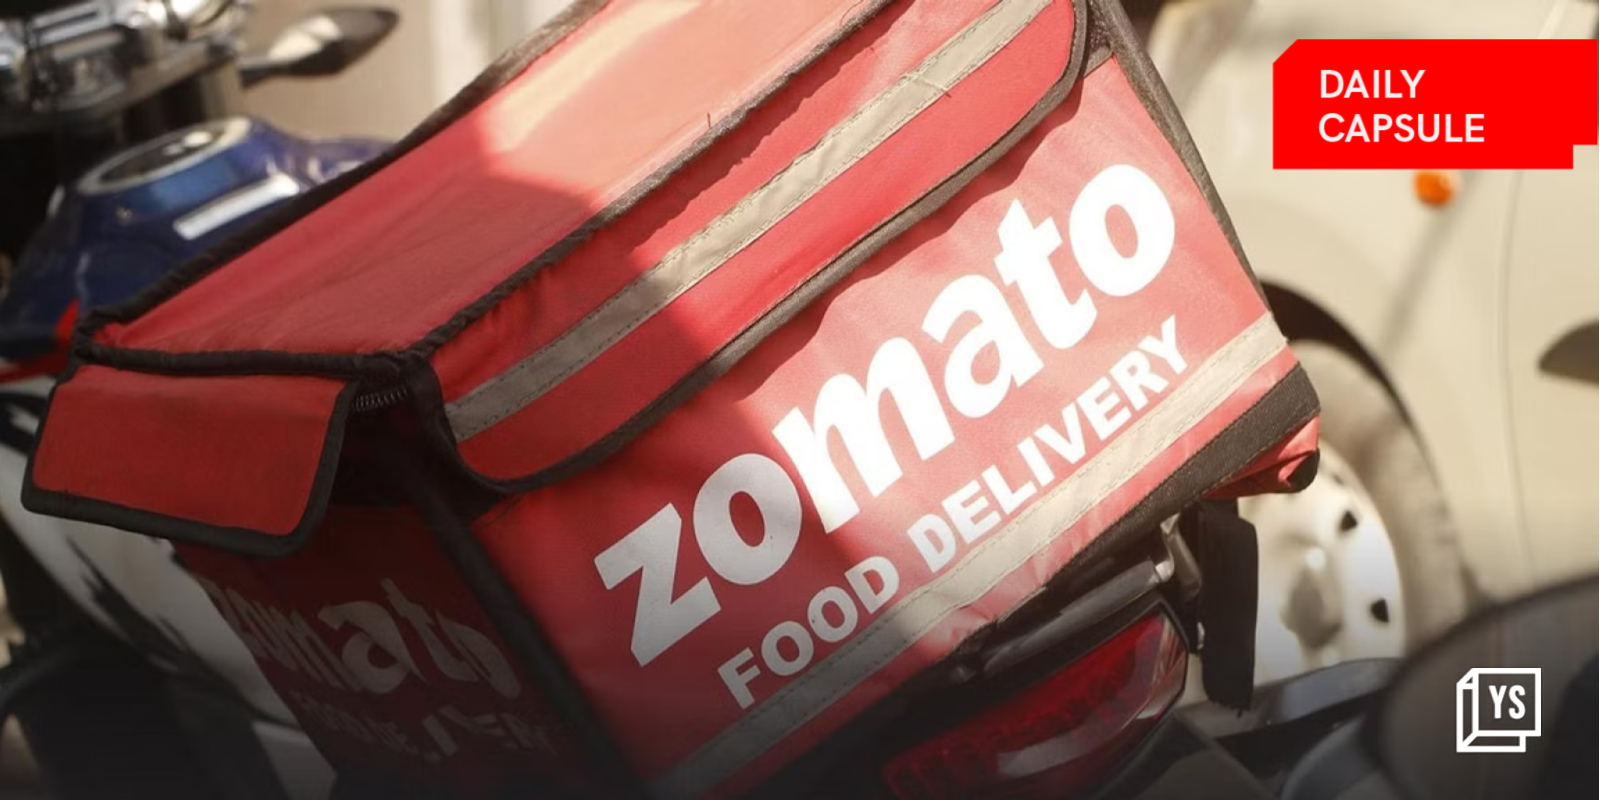 Zomato posts impressive earnings